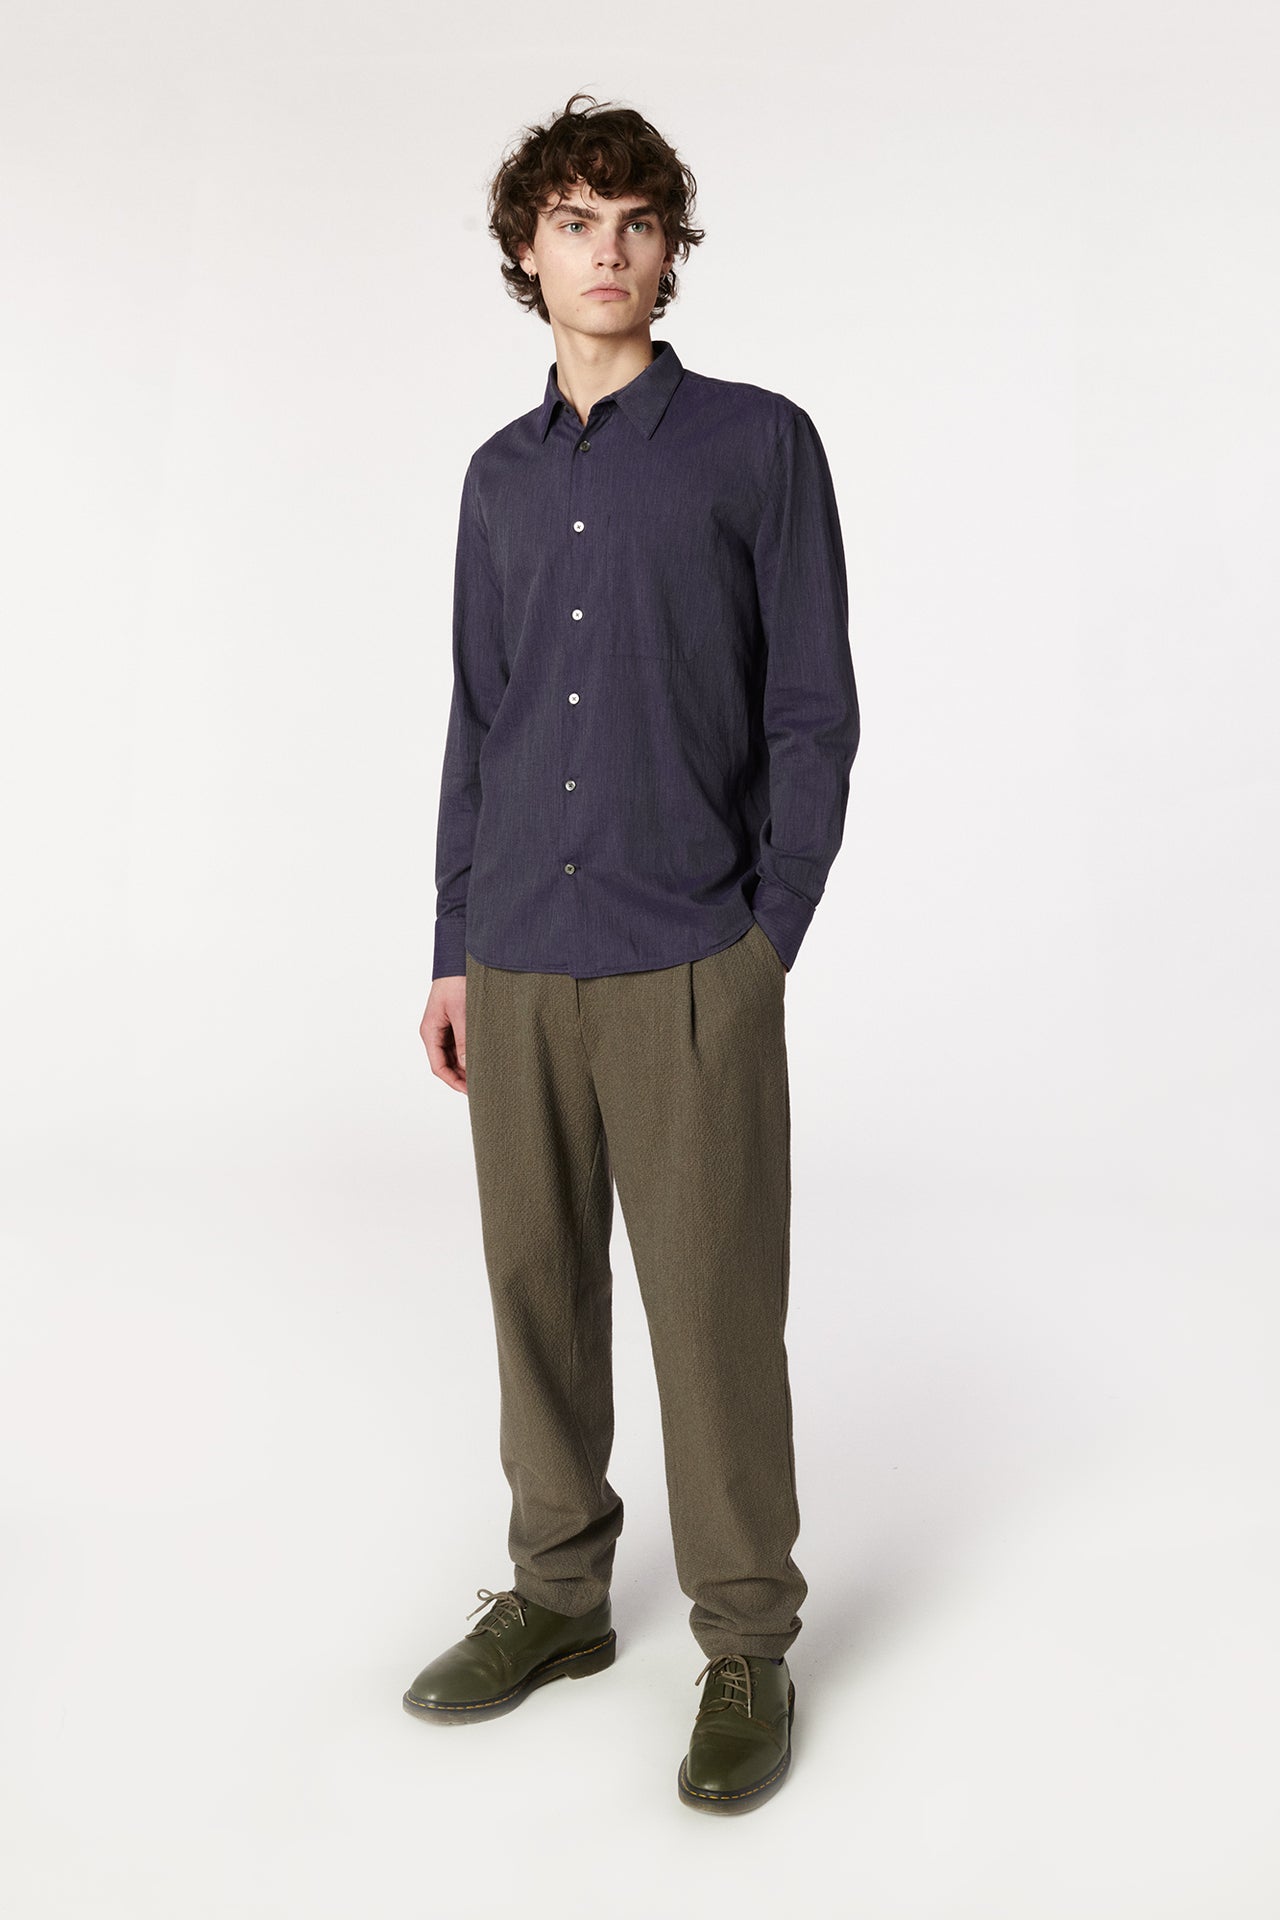 Feel Good Shirt in the Finest Purple Black Fine Herringbone Soft Italian Cotton Flannel